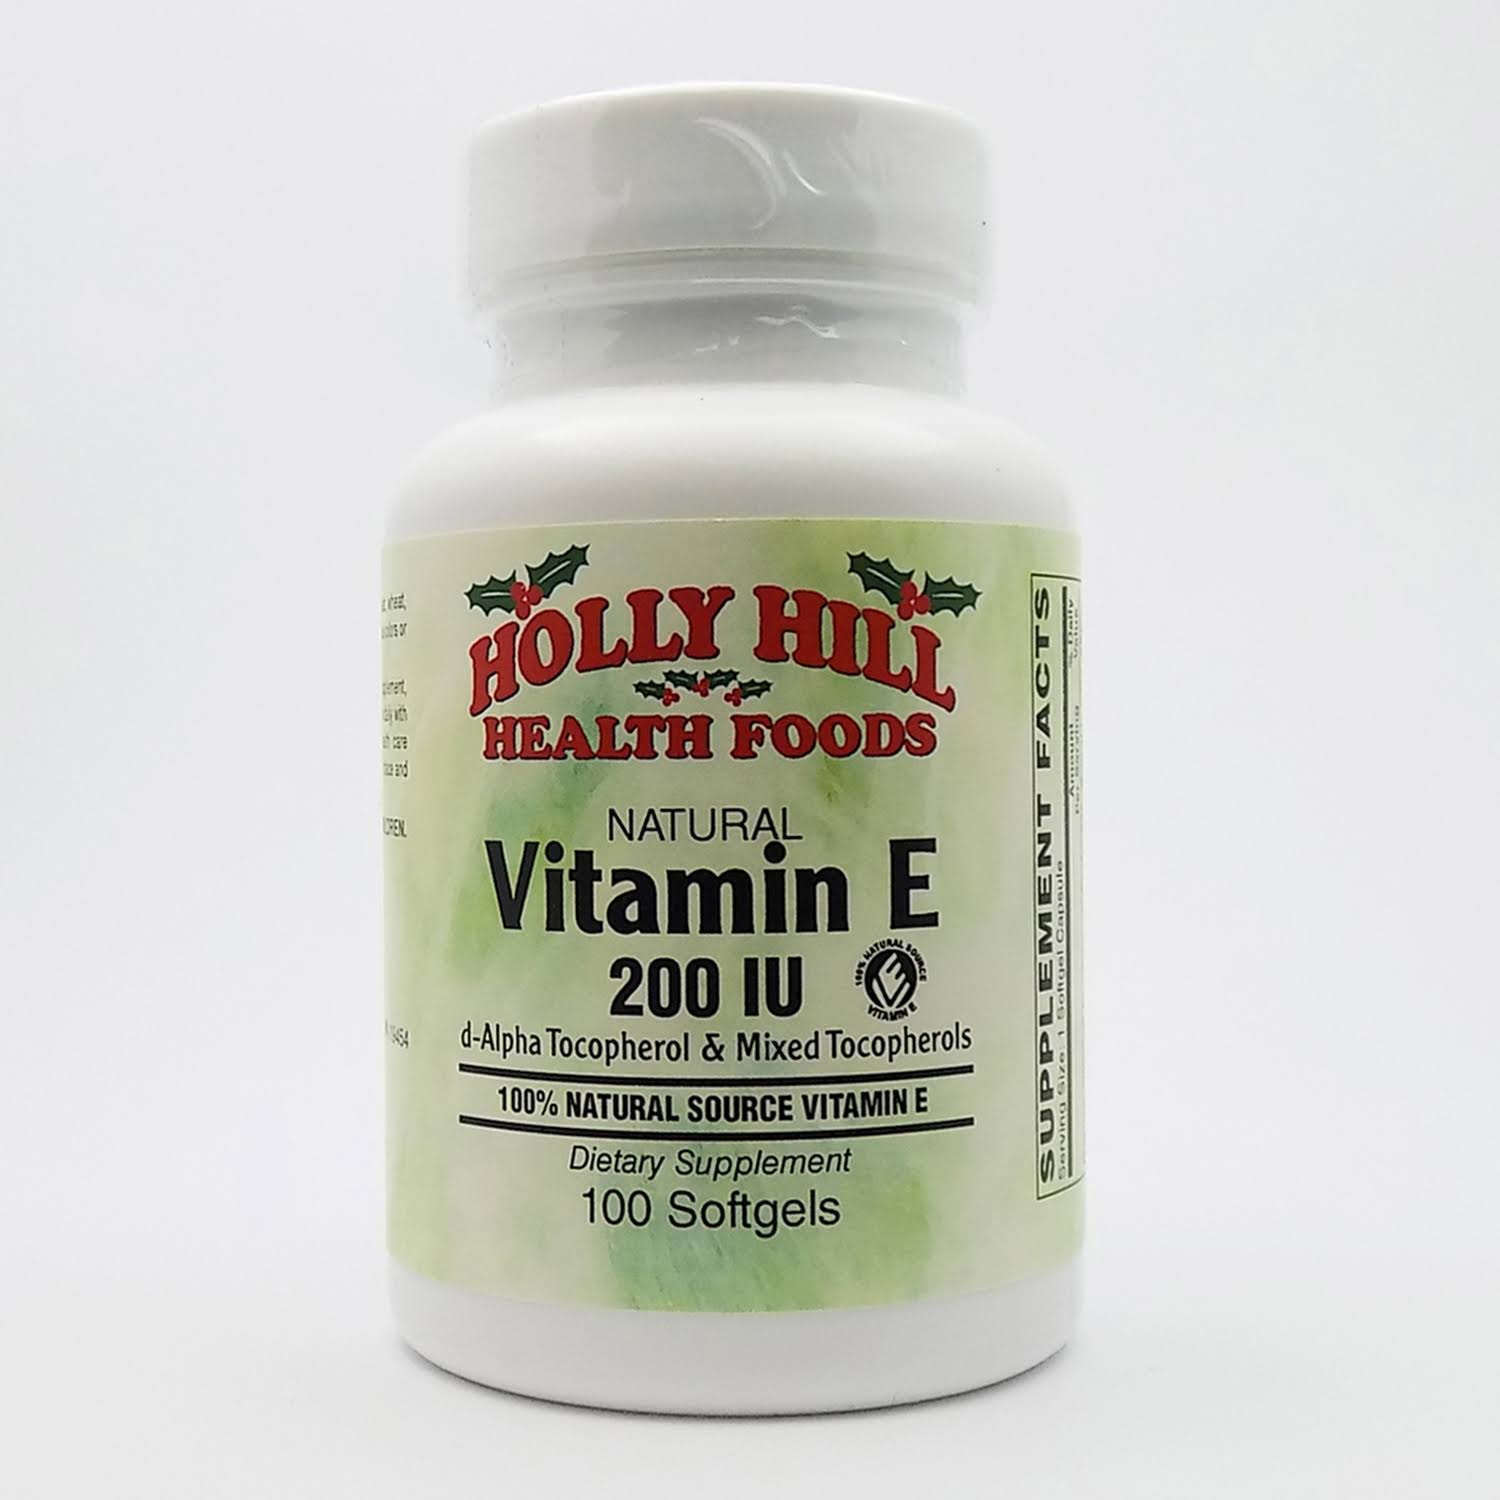 Holly Hill Health Foods, Vitamin E 200 IU, 100 Softgels